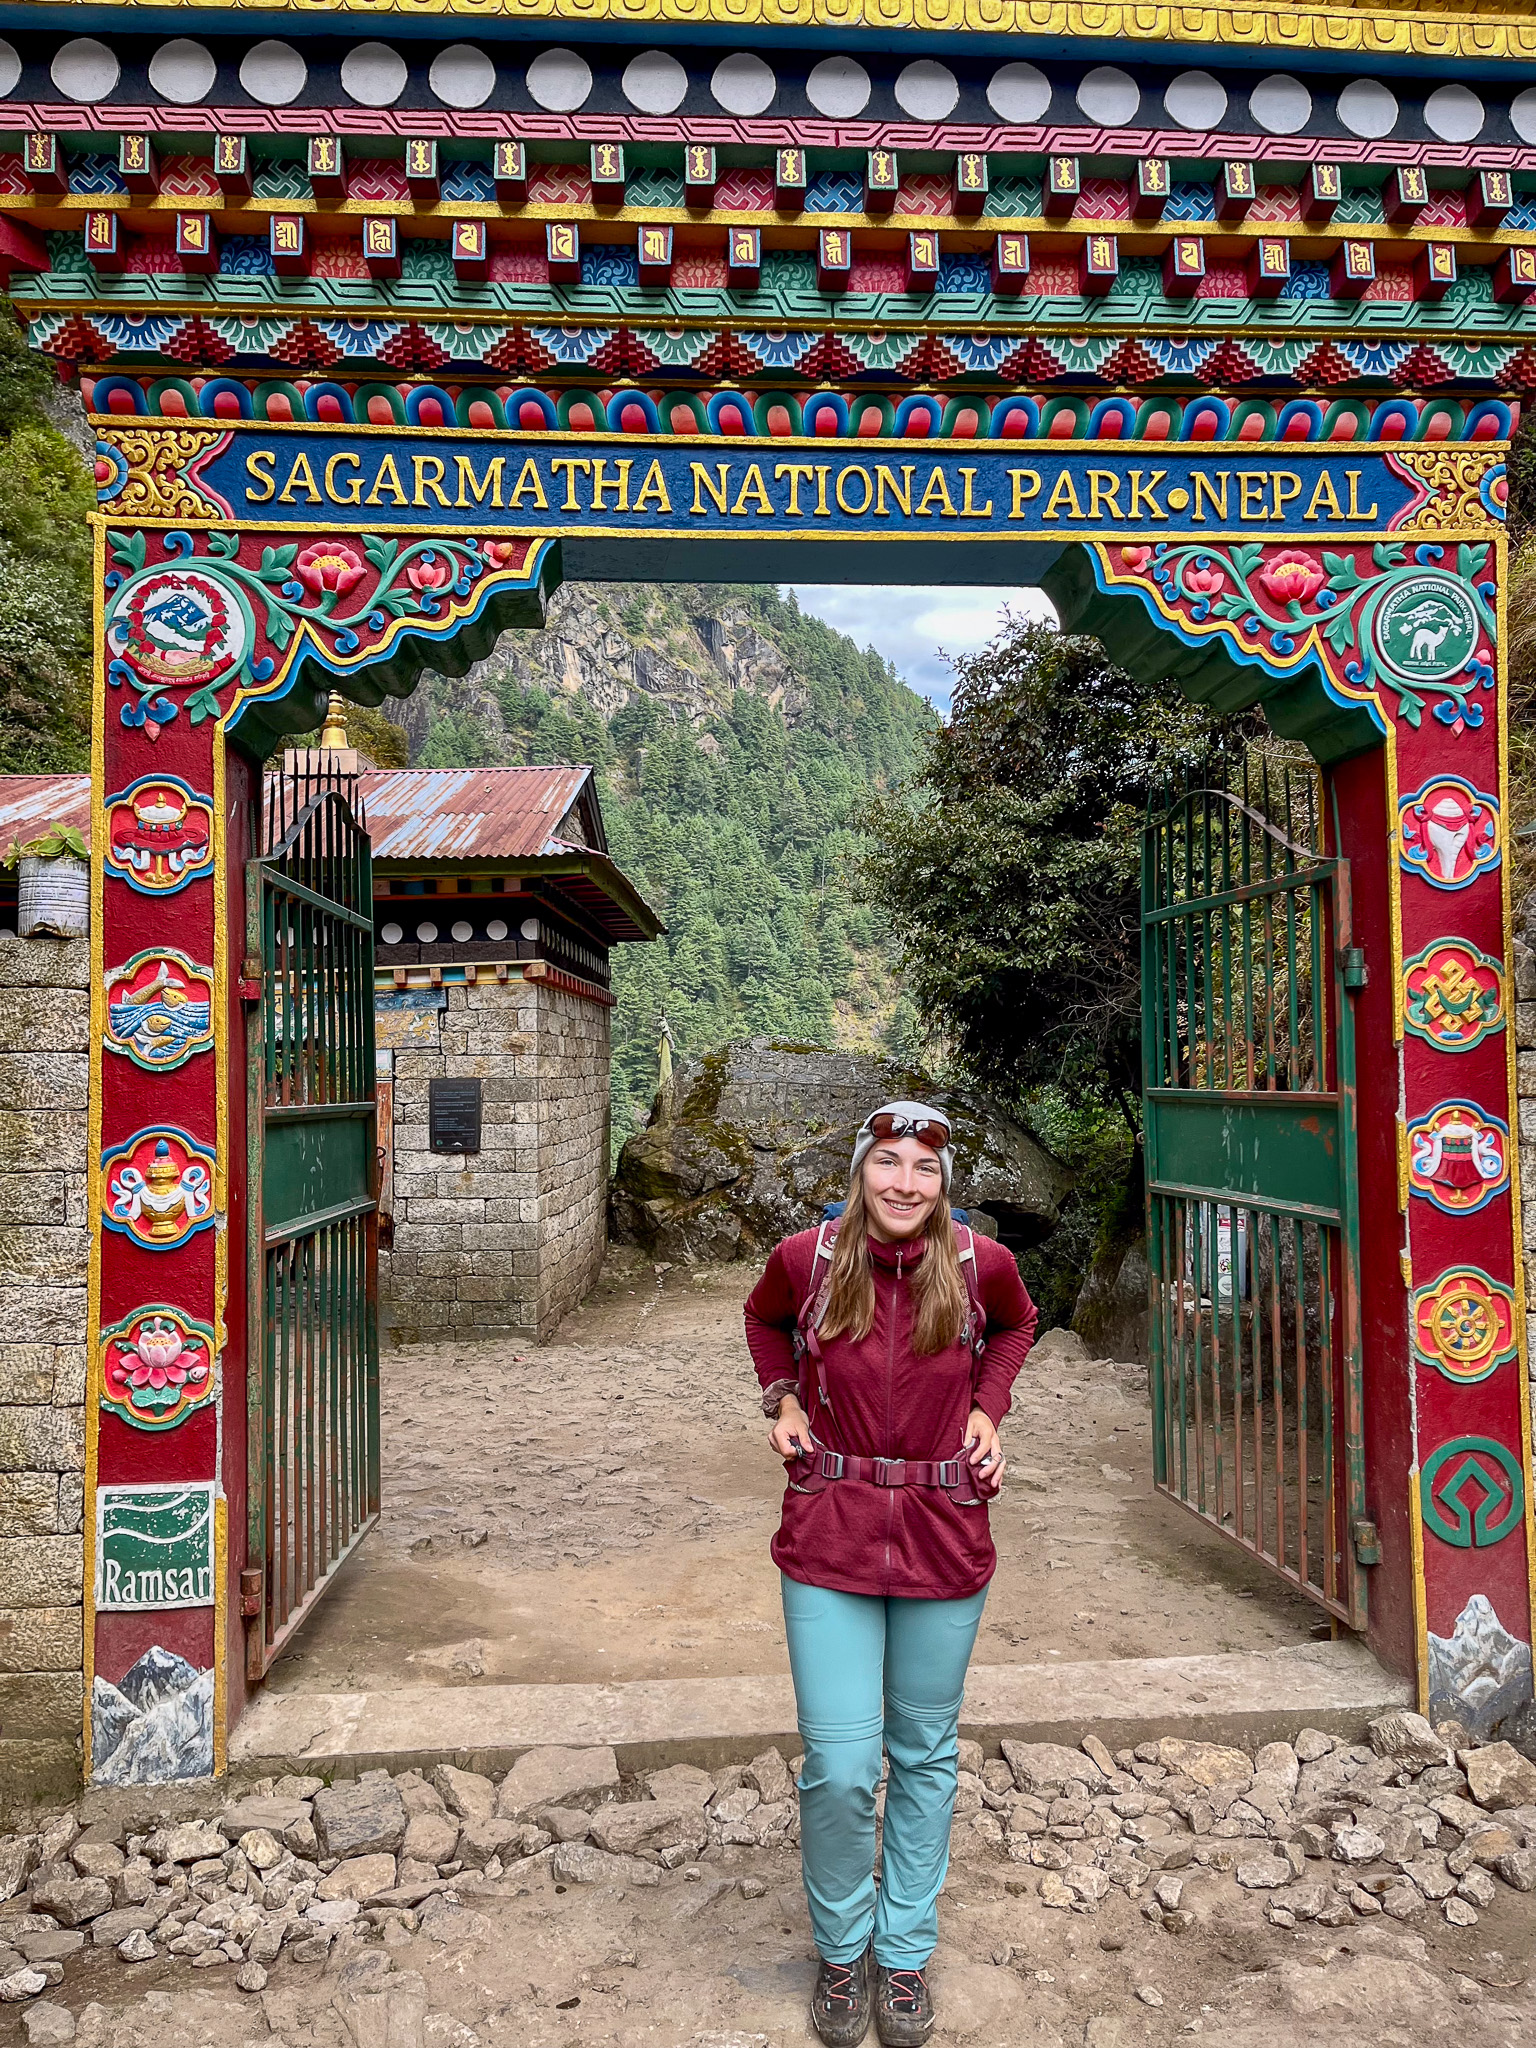 Entrance to Sagarmatha National Park Nepal